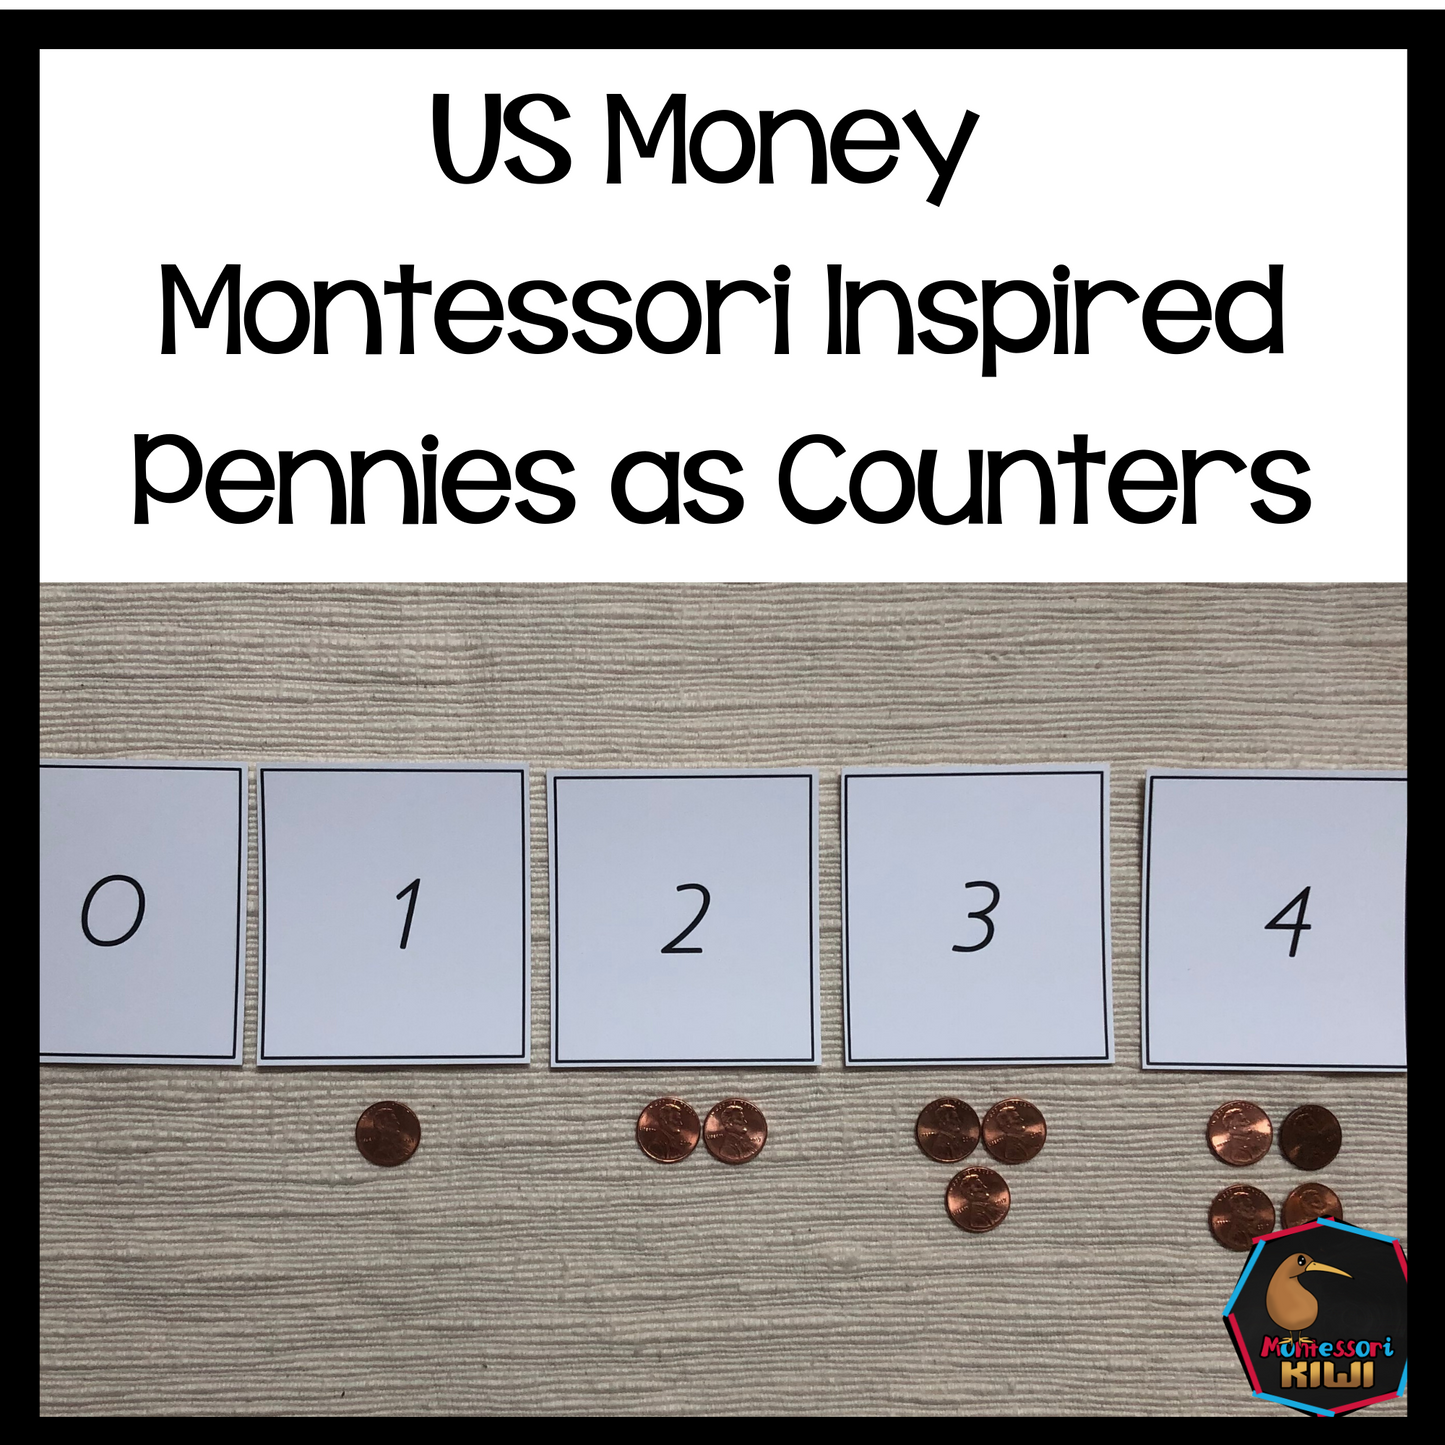 US Money Montessori Inspired Pennies as Counters - montessorikiwi